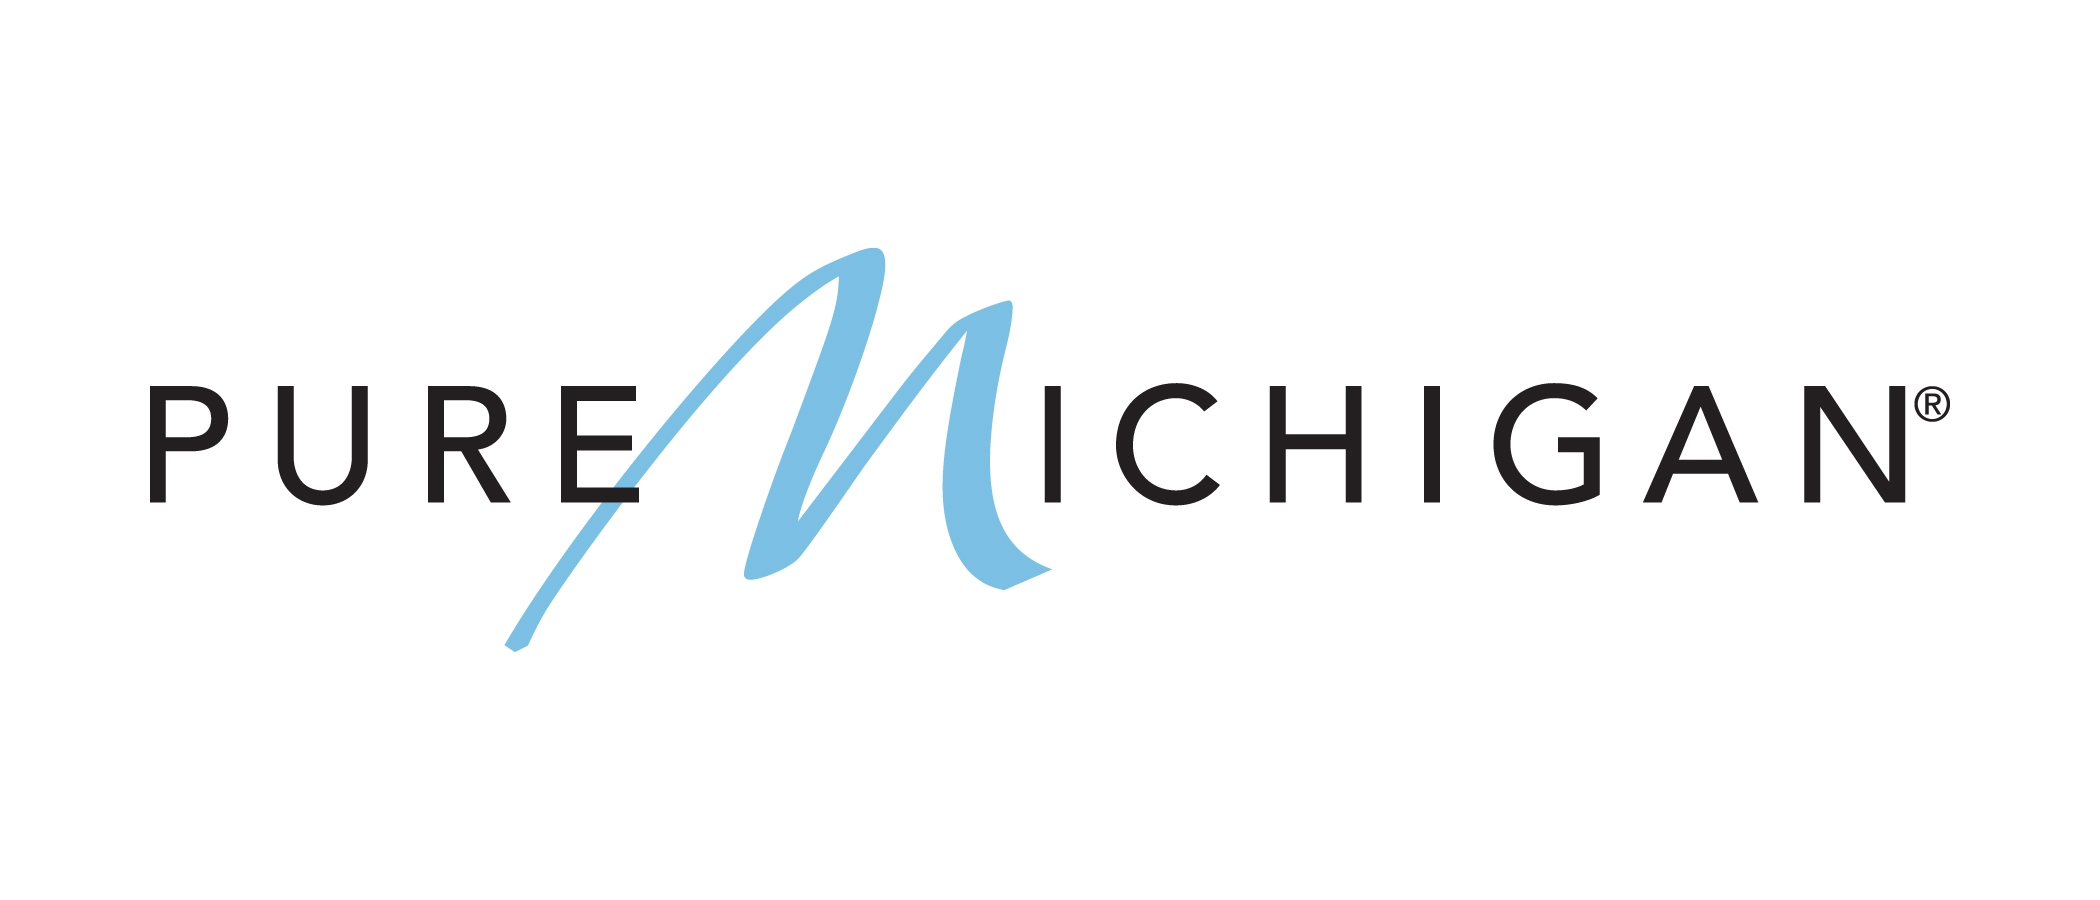 Pure Michigan Campaign Brings in 1 Billion OutdoorHub